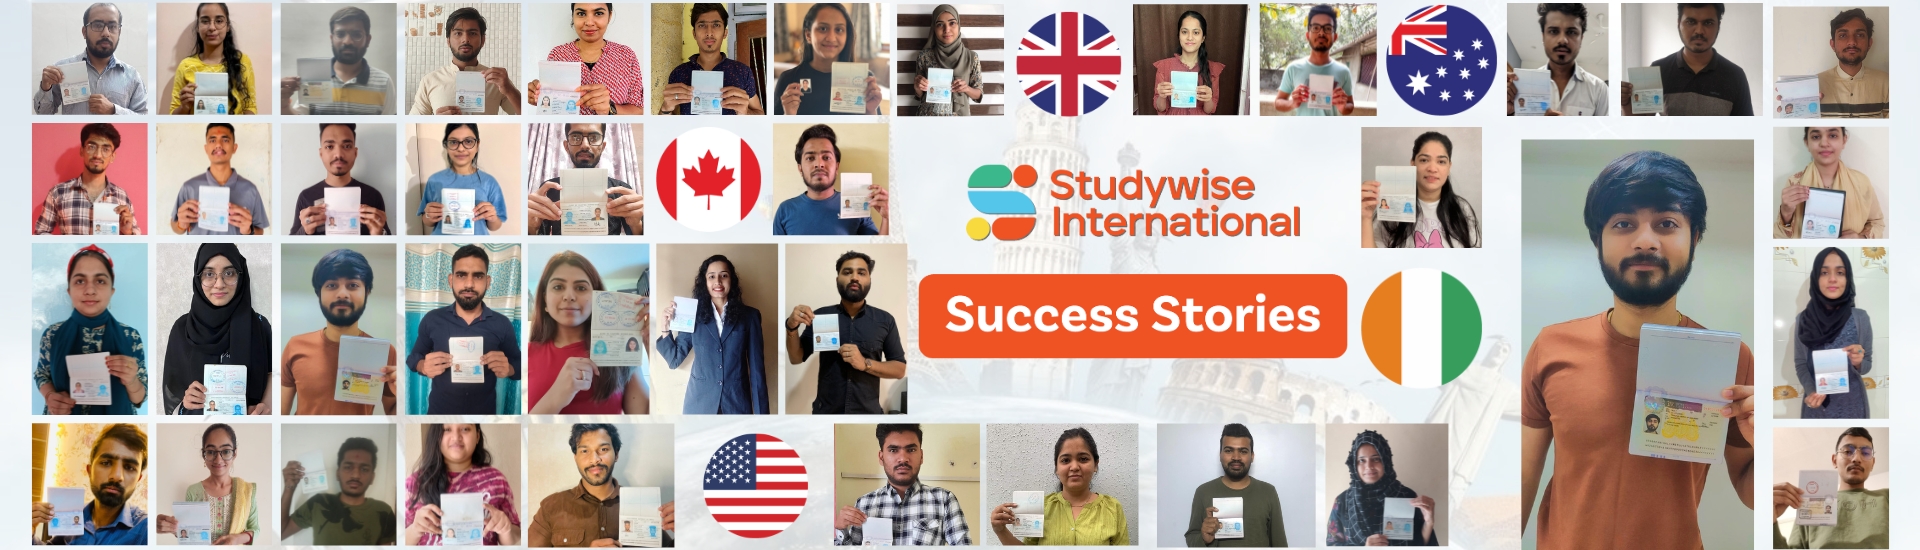 Success Stories Studywise International